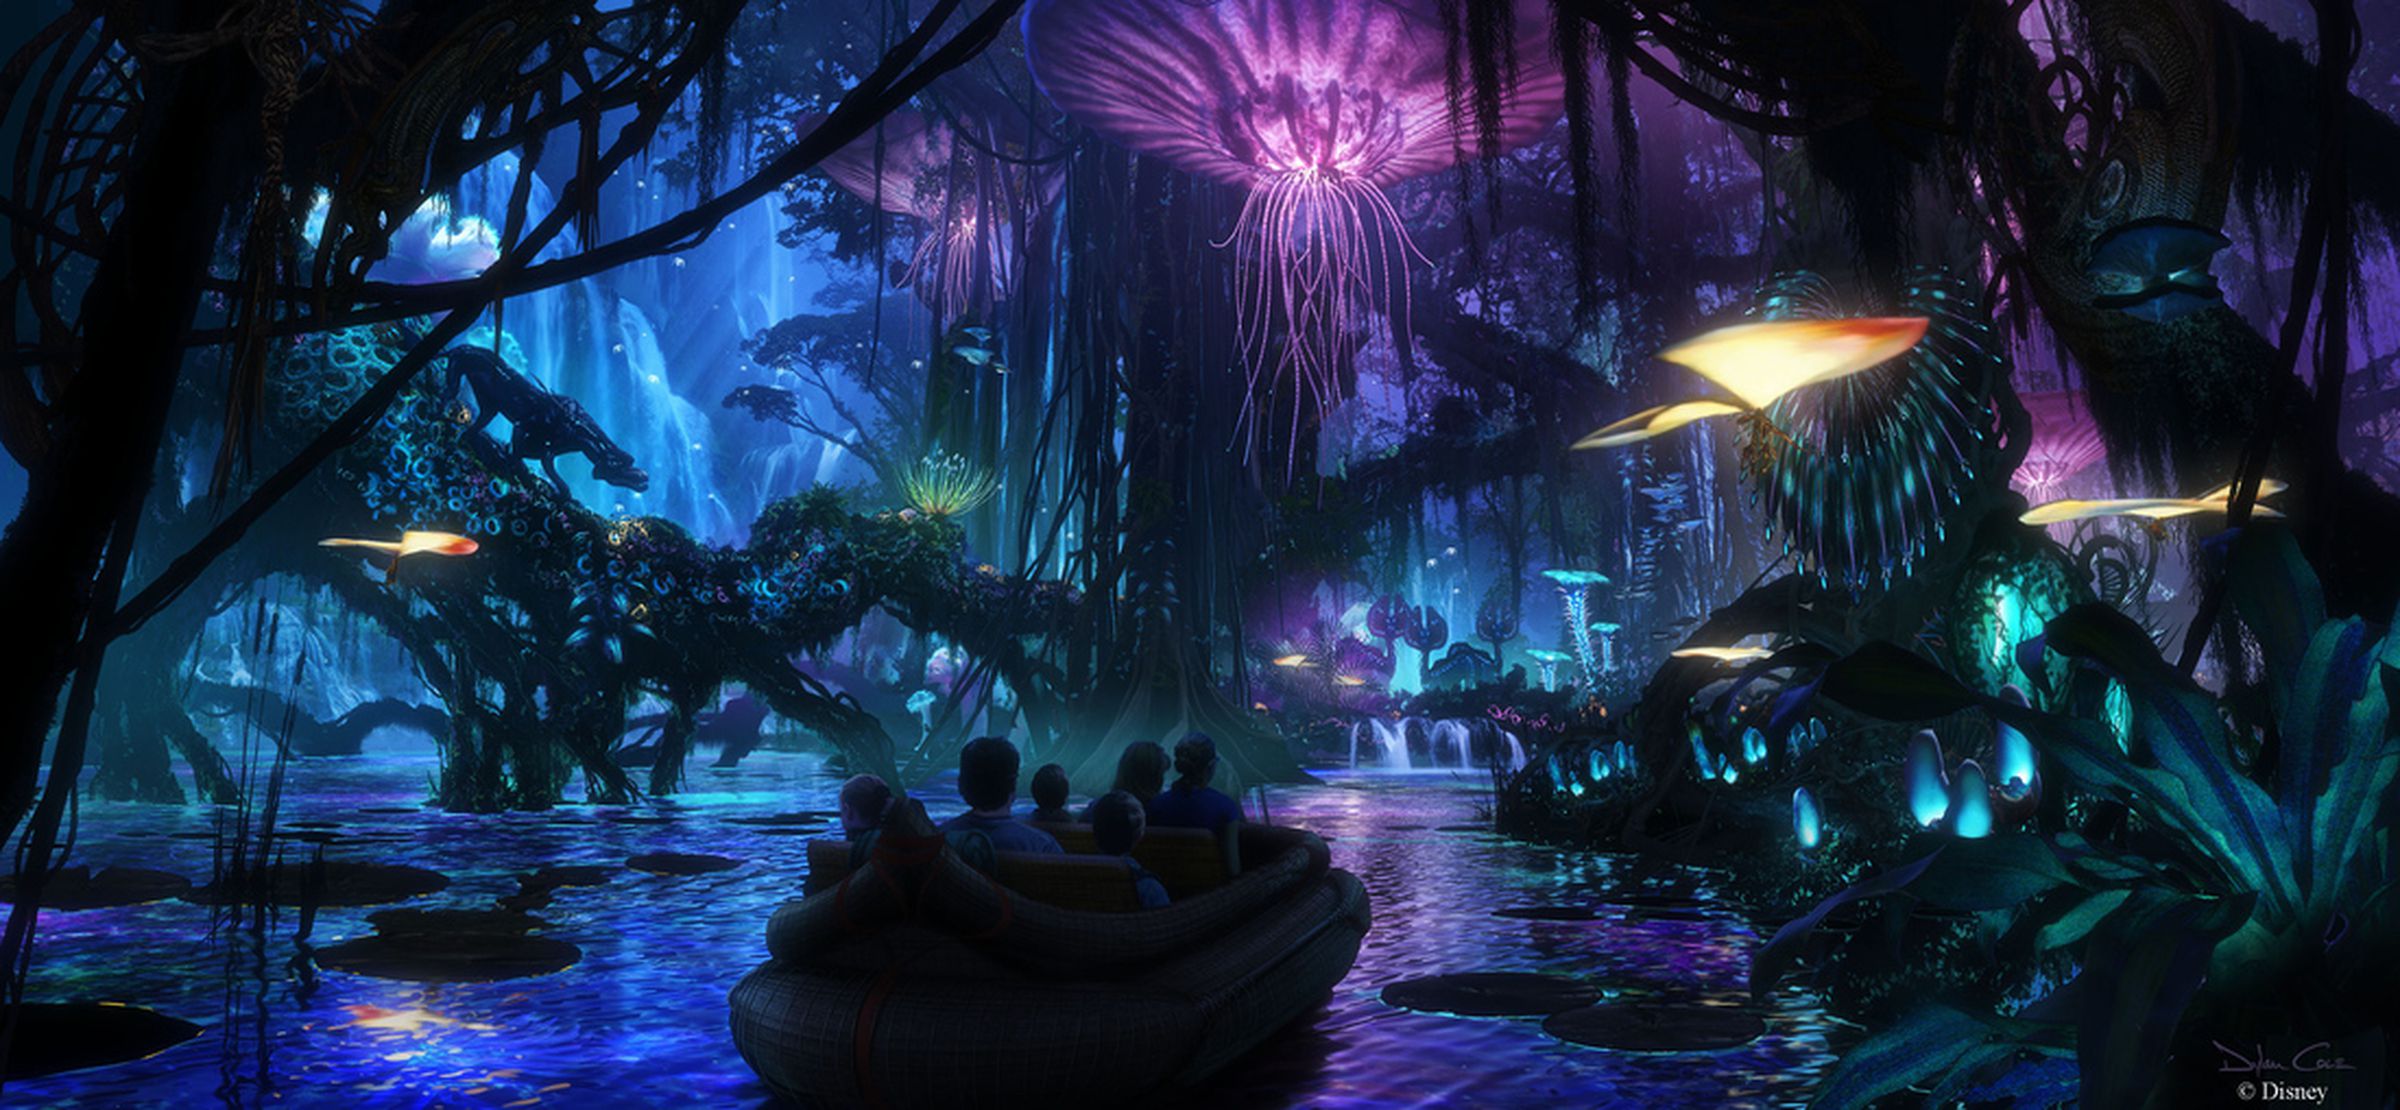 Disney 'Avatar' Land concept art